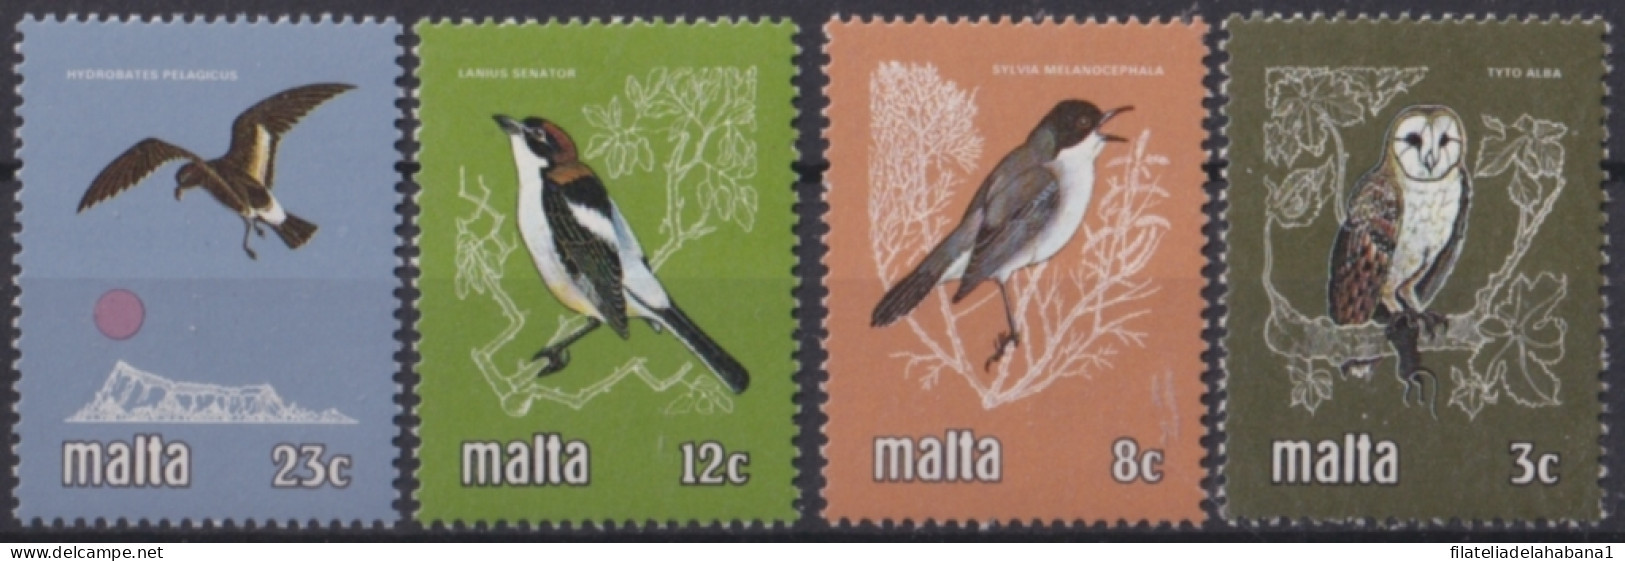 F-EX47947 MALTA MNH 1981 BIRD AVES PAJAROS OISEAUX OWL.  - Colecciones & Series